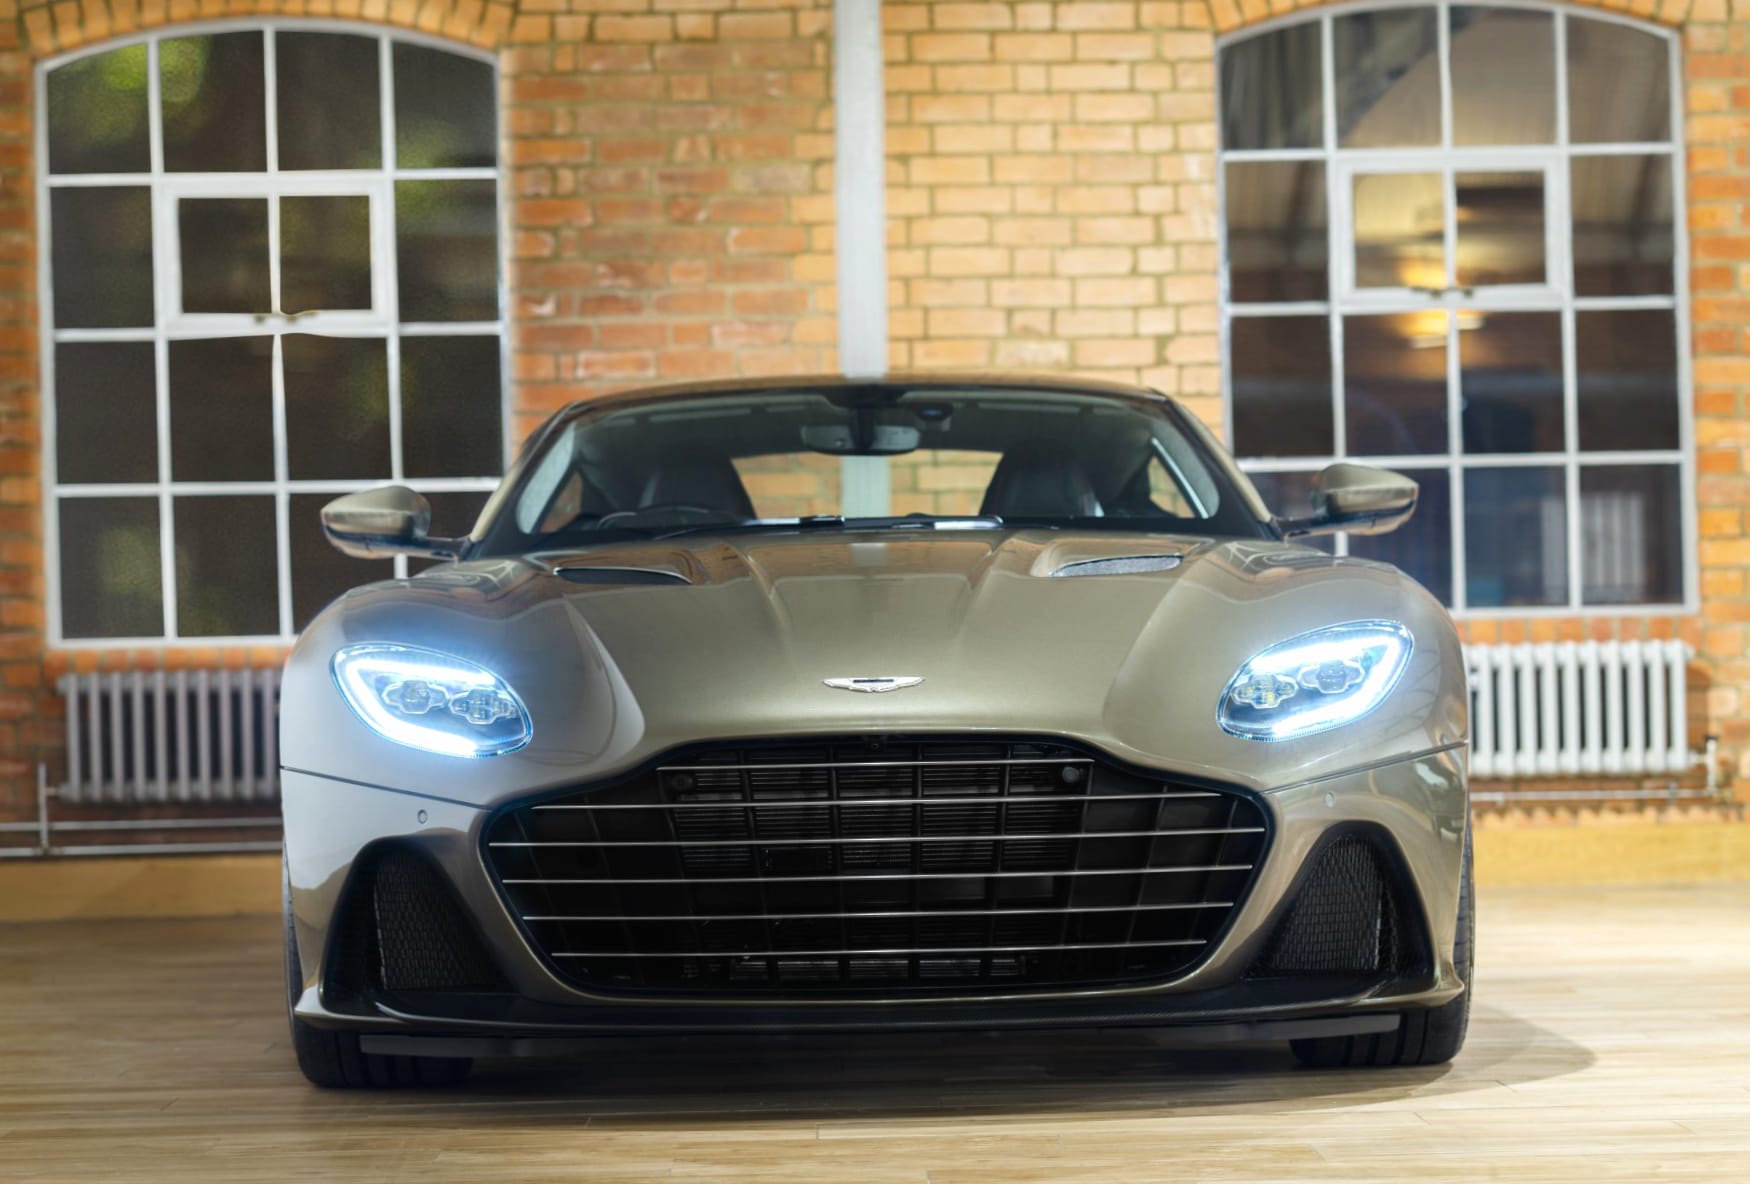 Aston Martin DBS Superleggera wallpapers HD quality